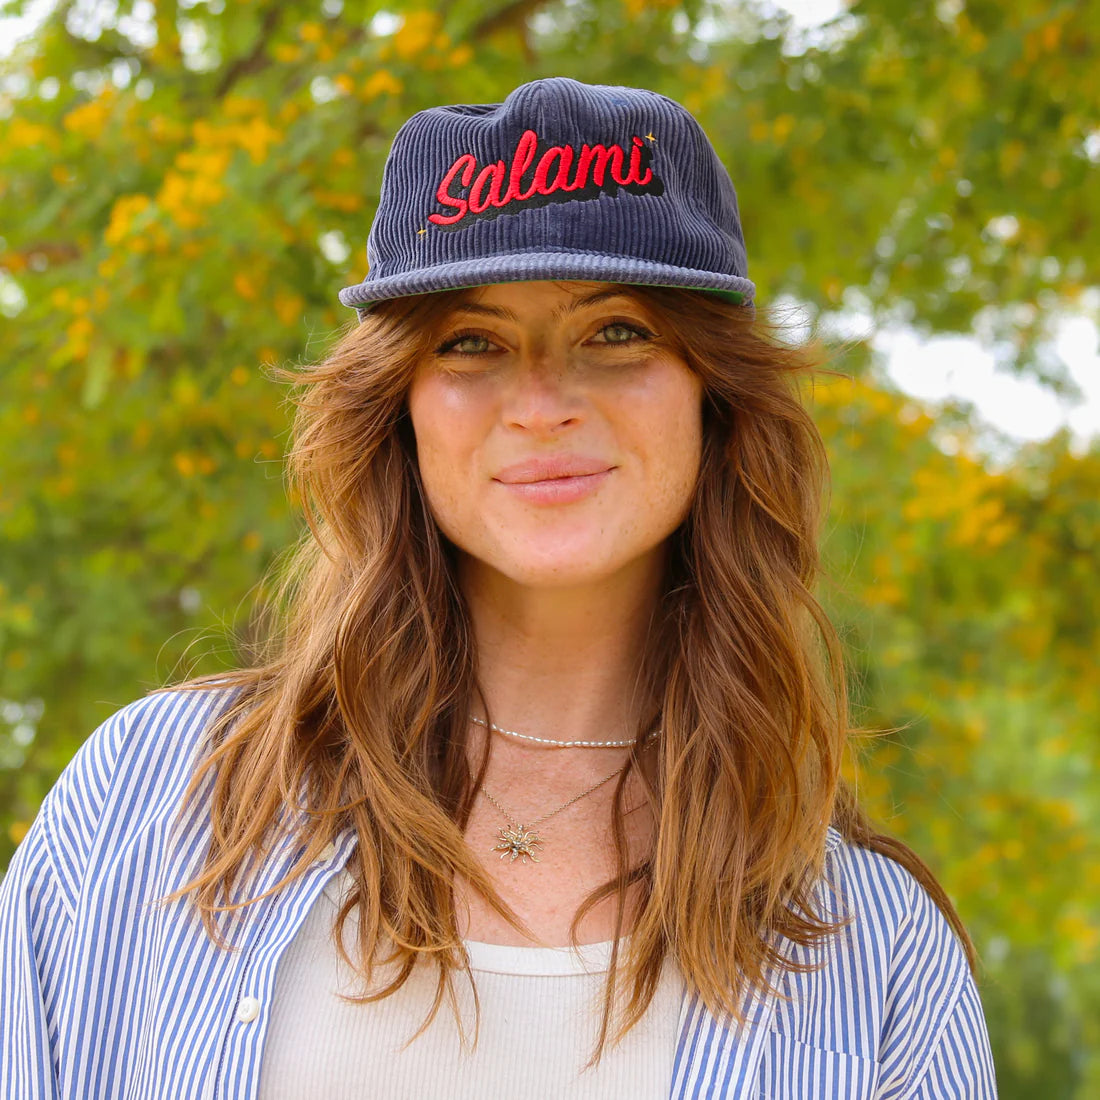 Salami hat on female model.